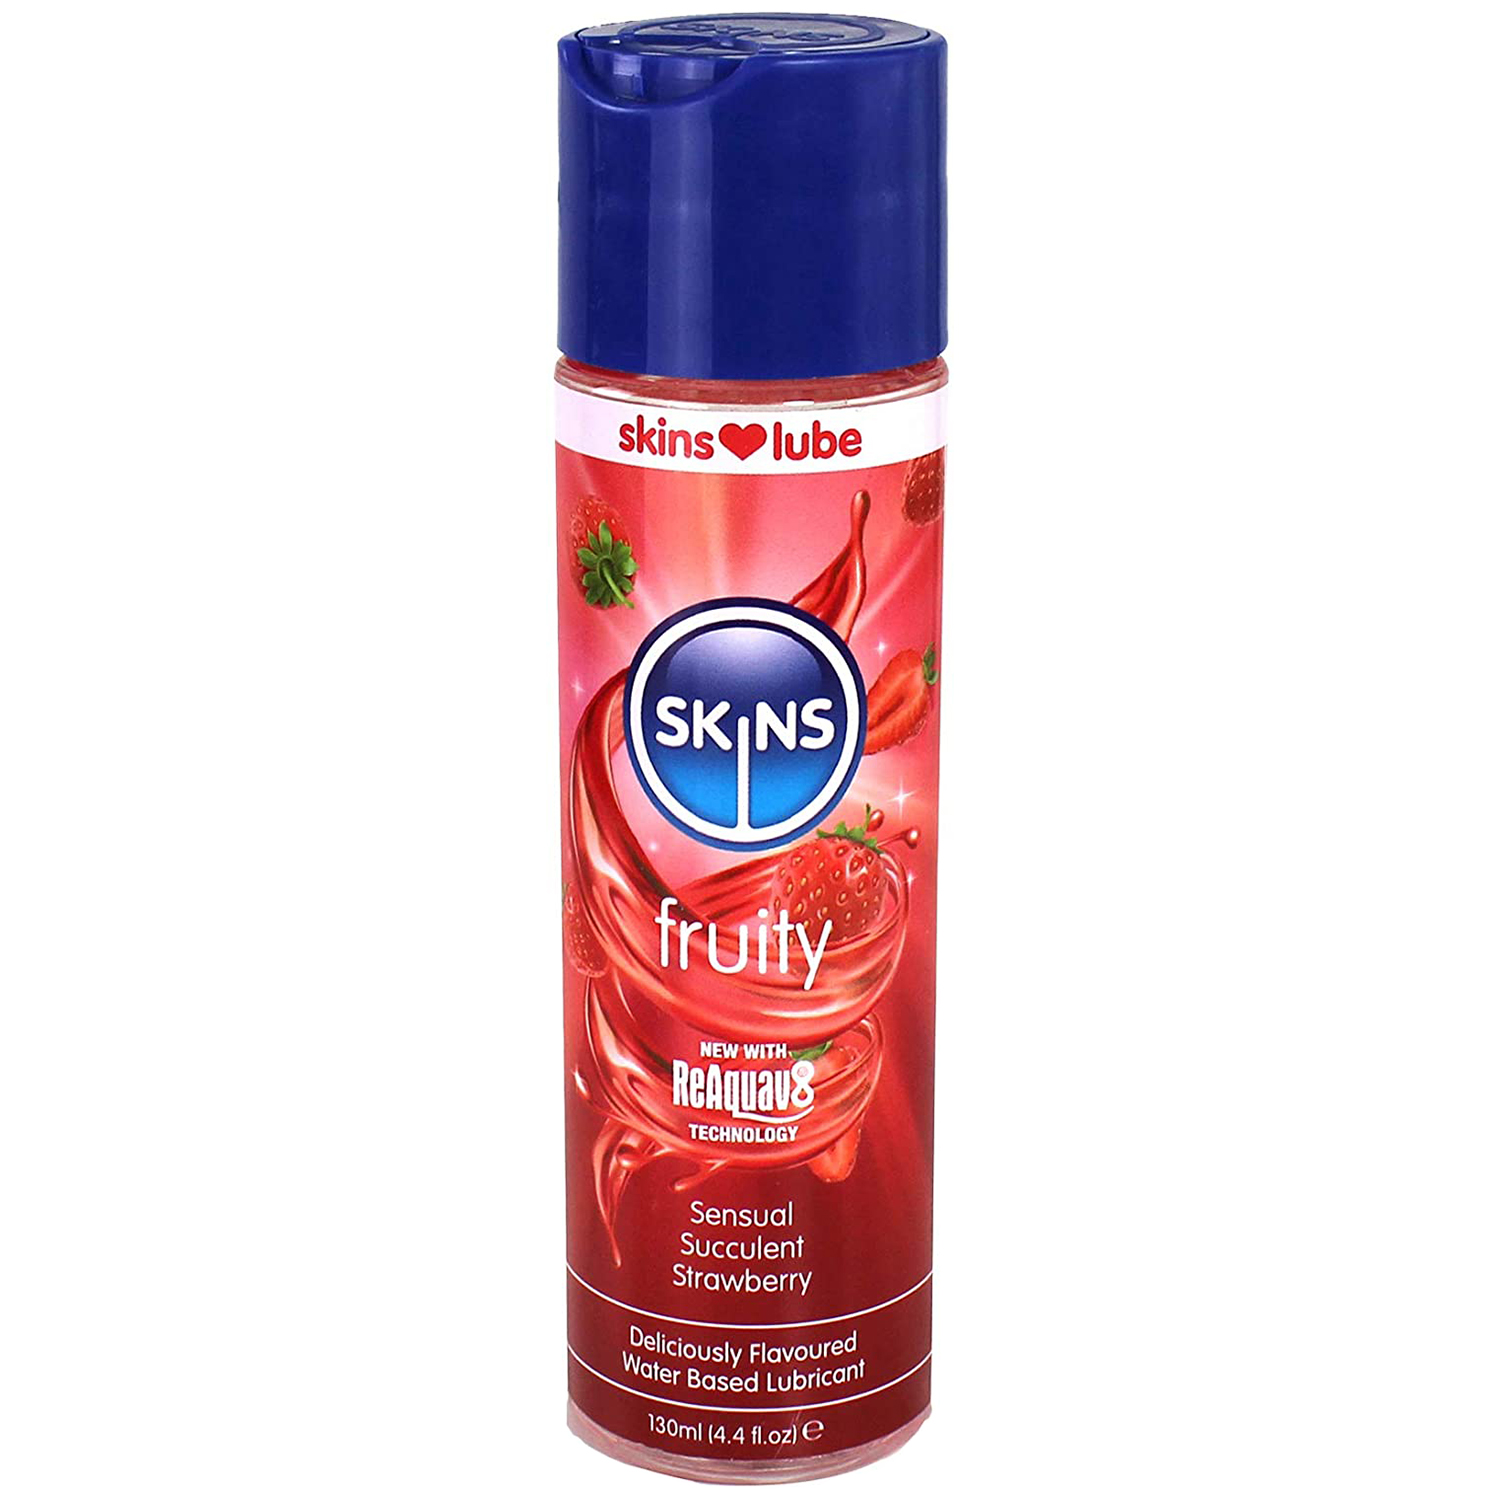 Skins Fruity Vandbaseret Glidecreme 130 ml